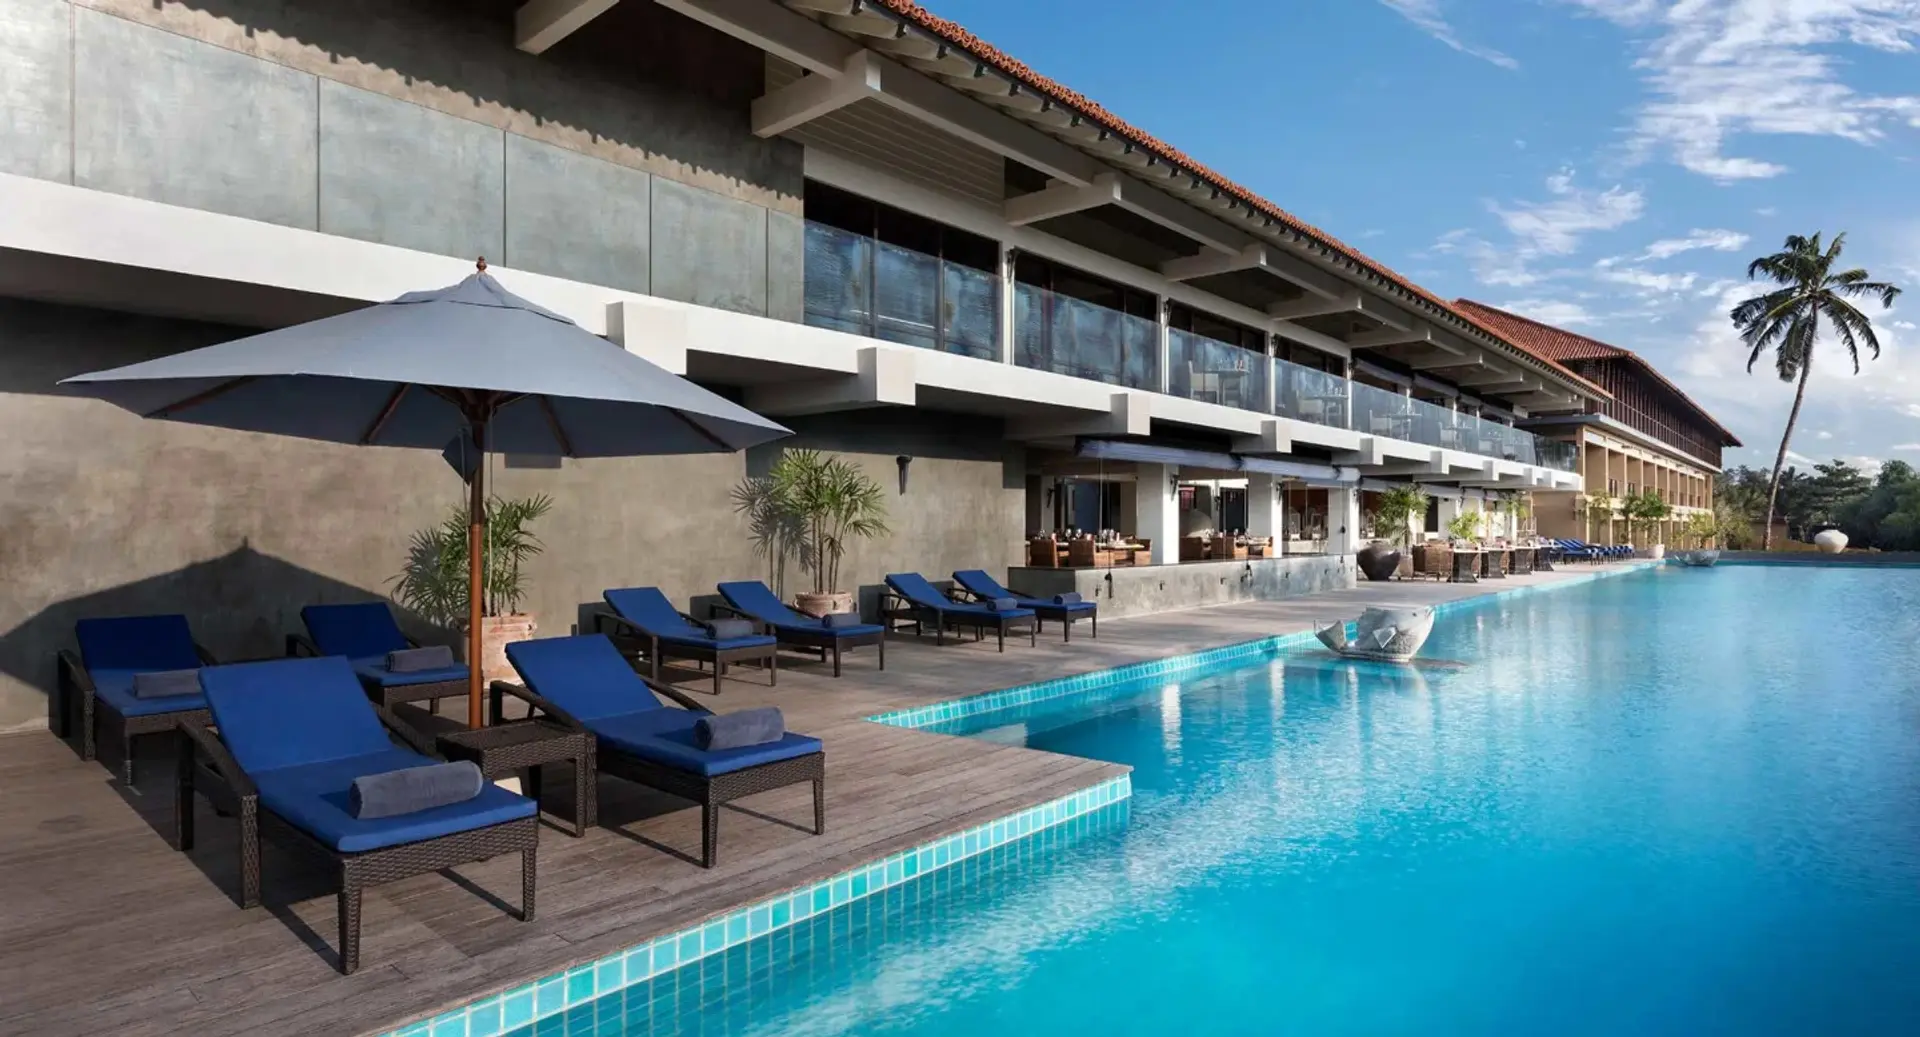 Hotel review Service & Facilities' - Anantara Kalutara Resort - 1